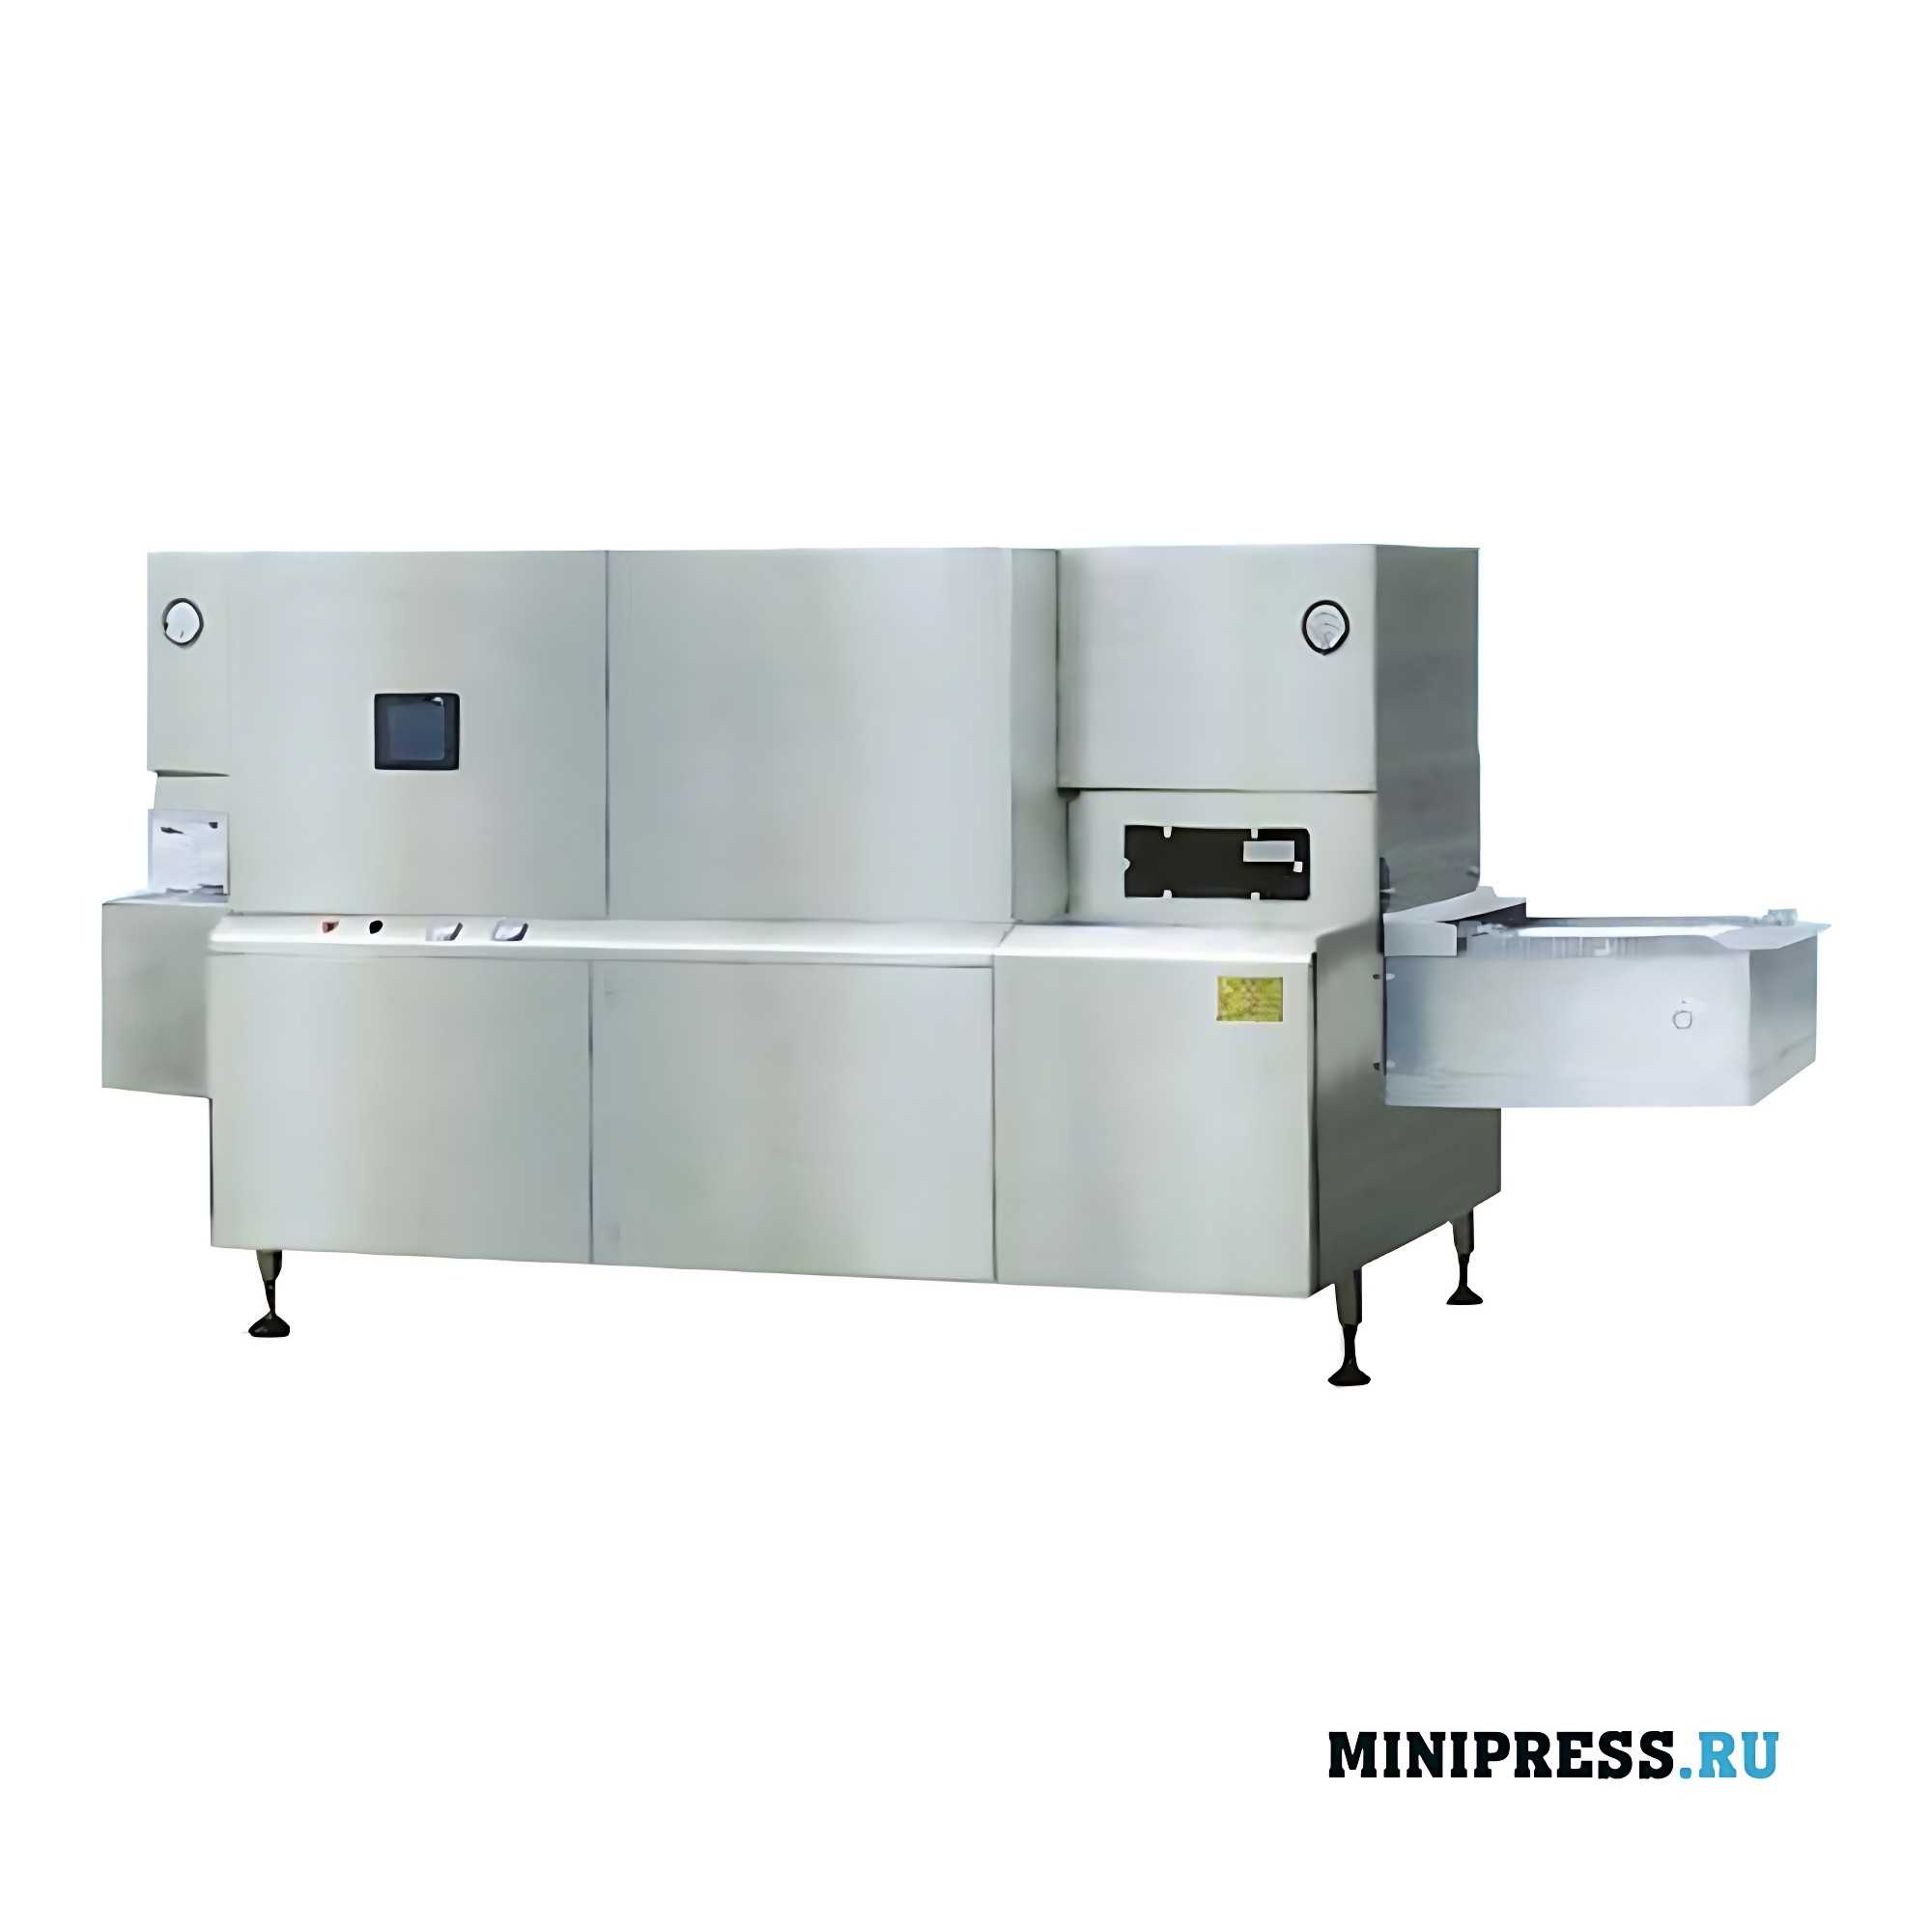 Short-wave sterilizer drying based on infrared radiation ZHP GM